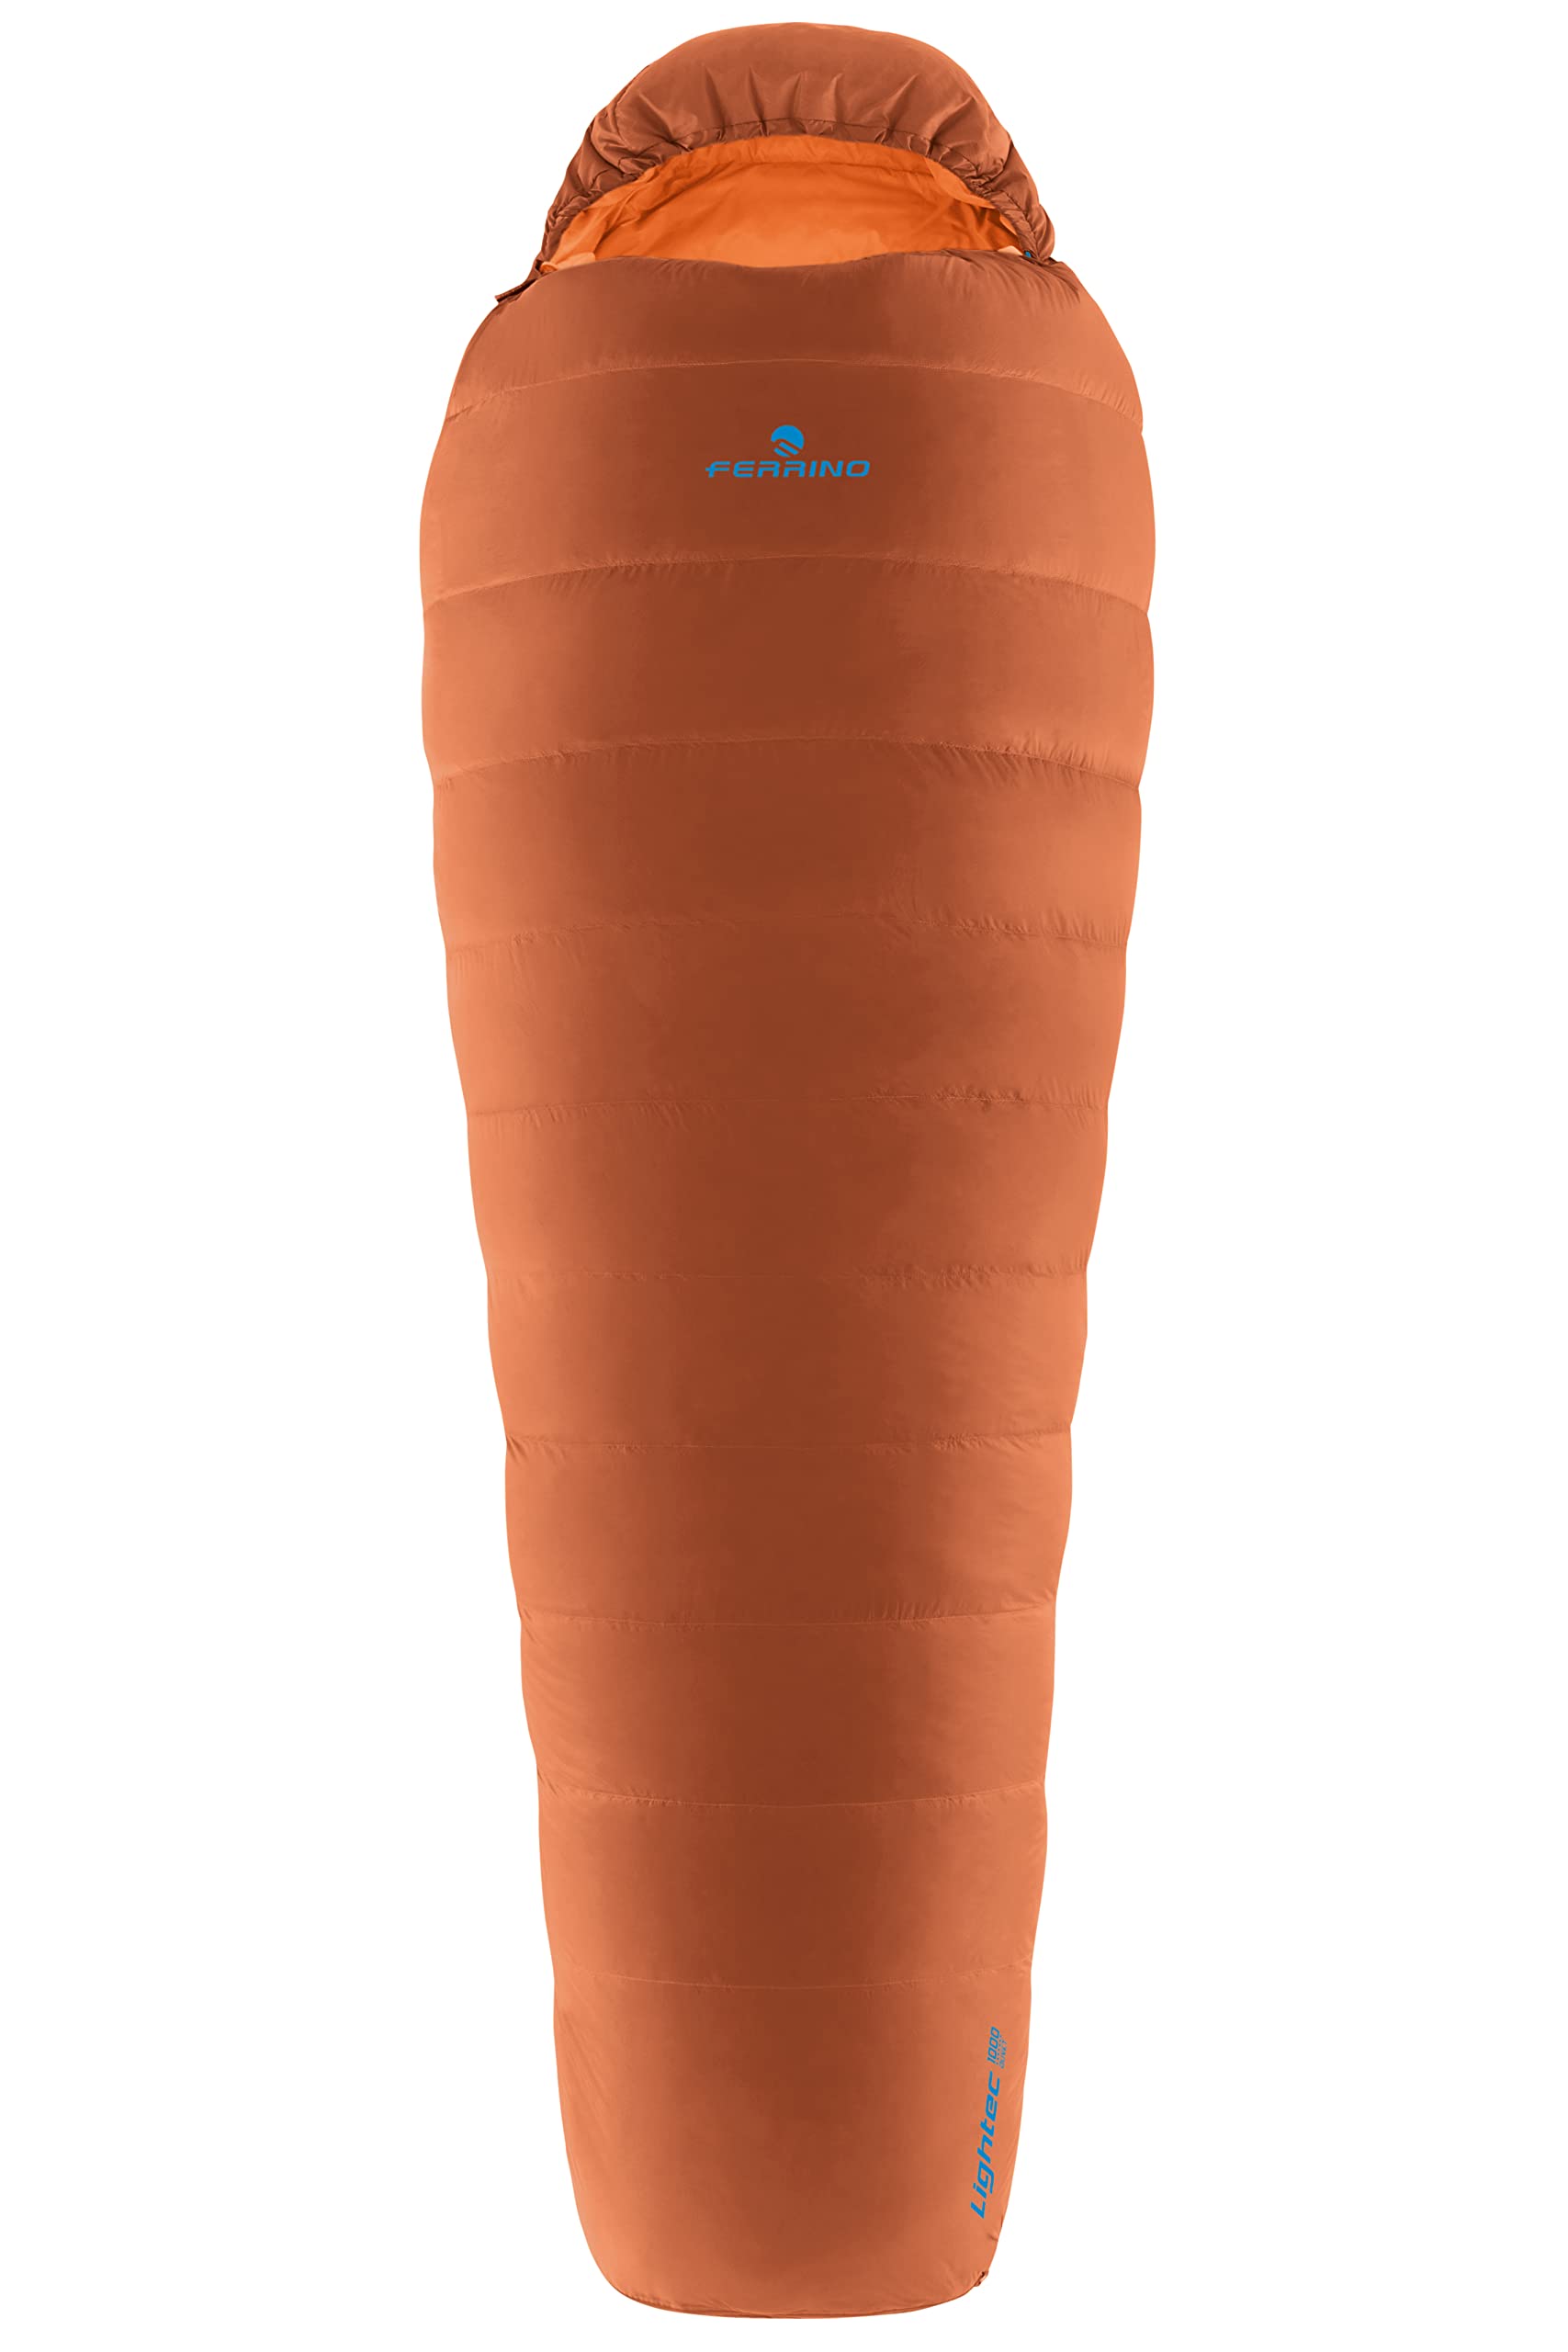 Ferrino Lightec 1000 Duvet Schlafsack, Orange, g